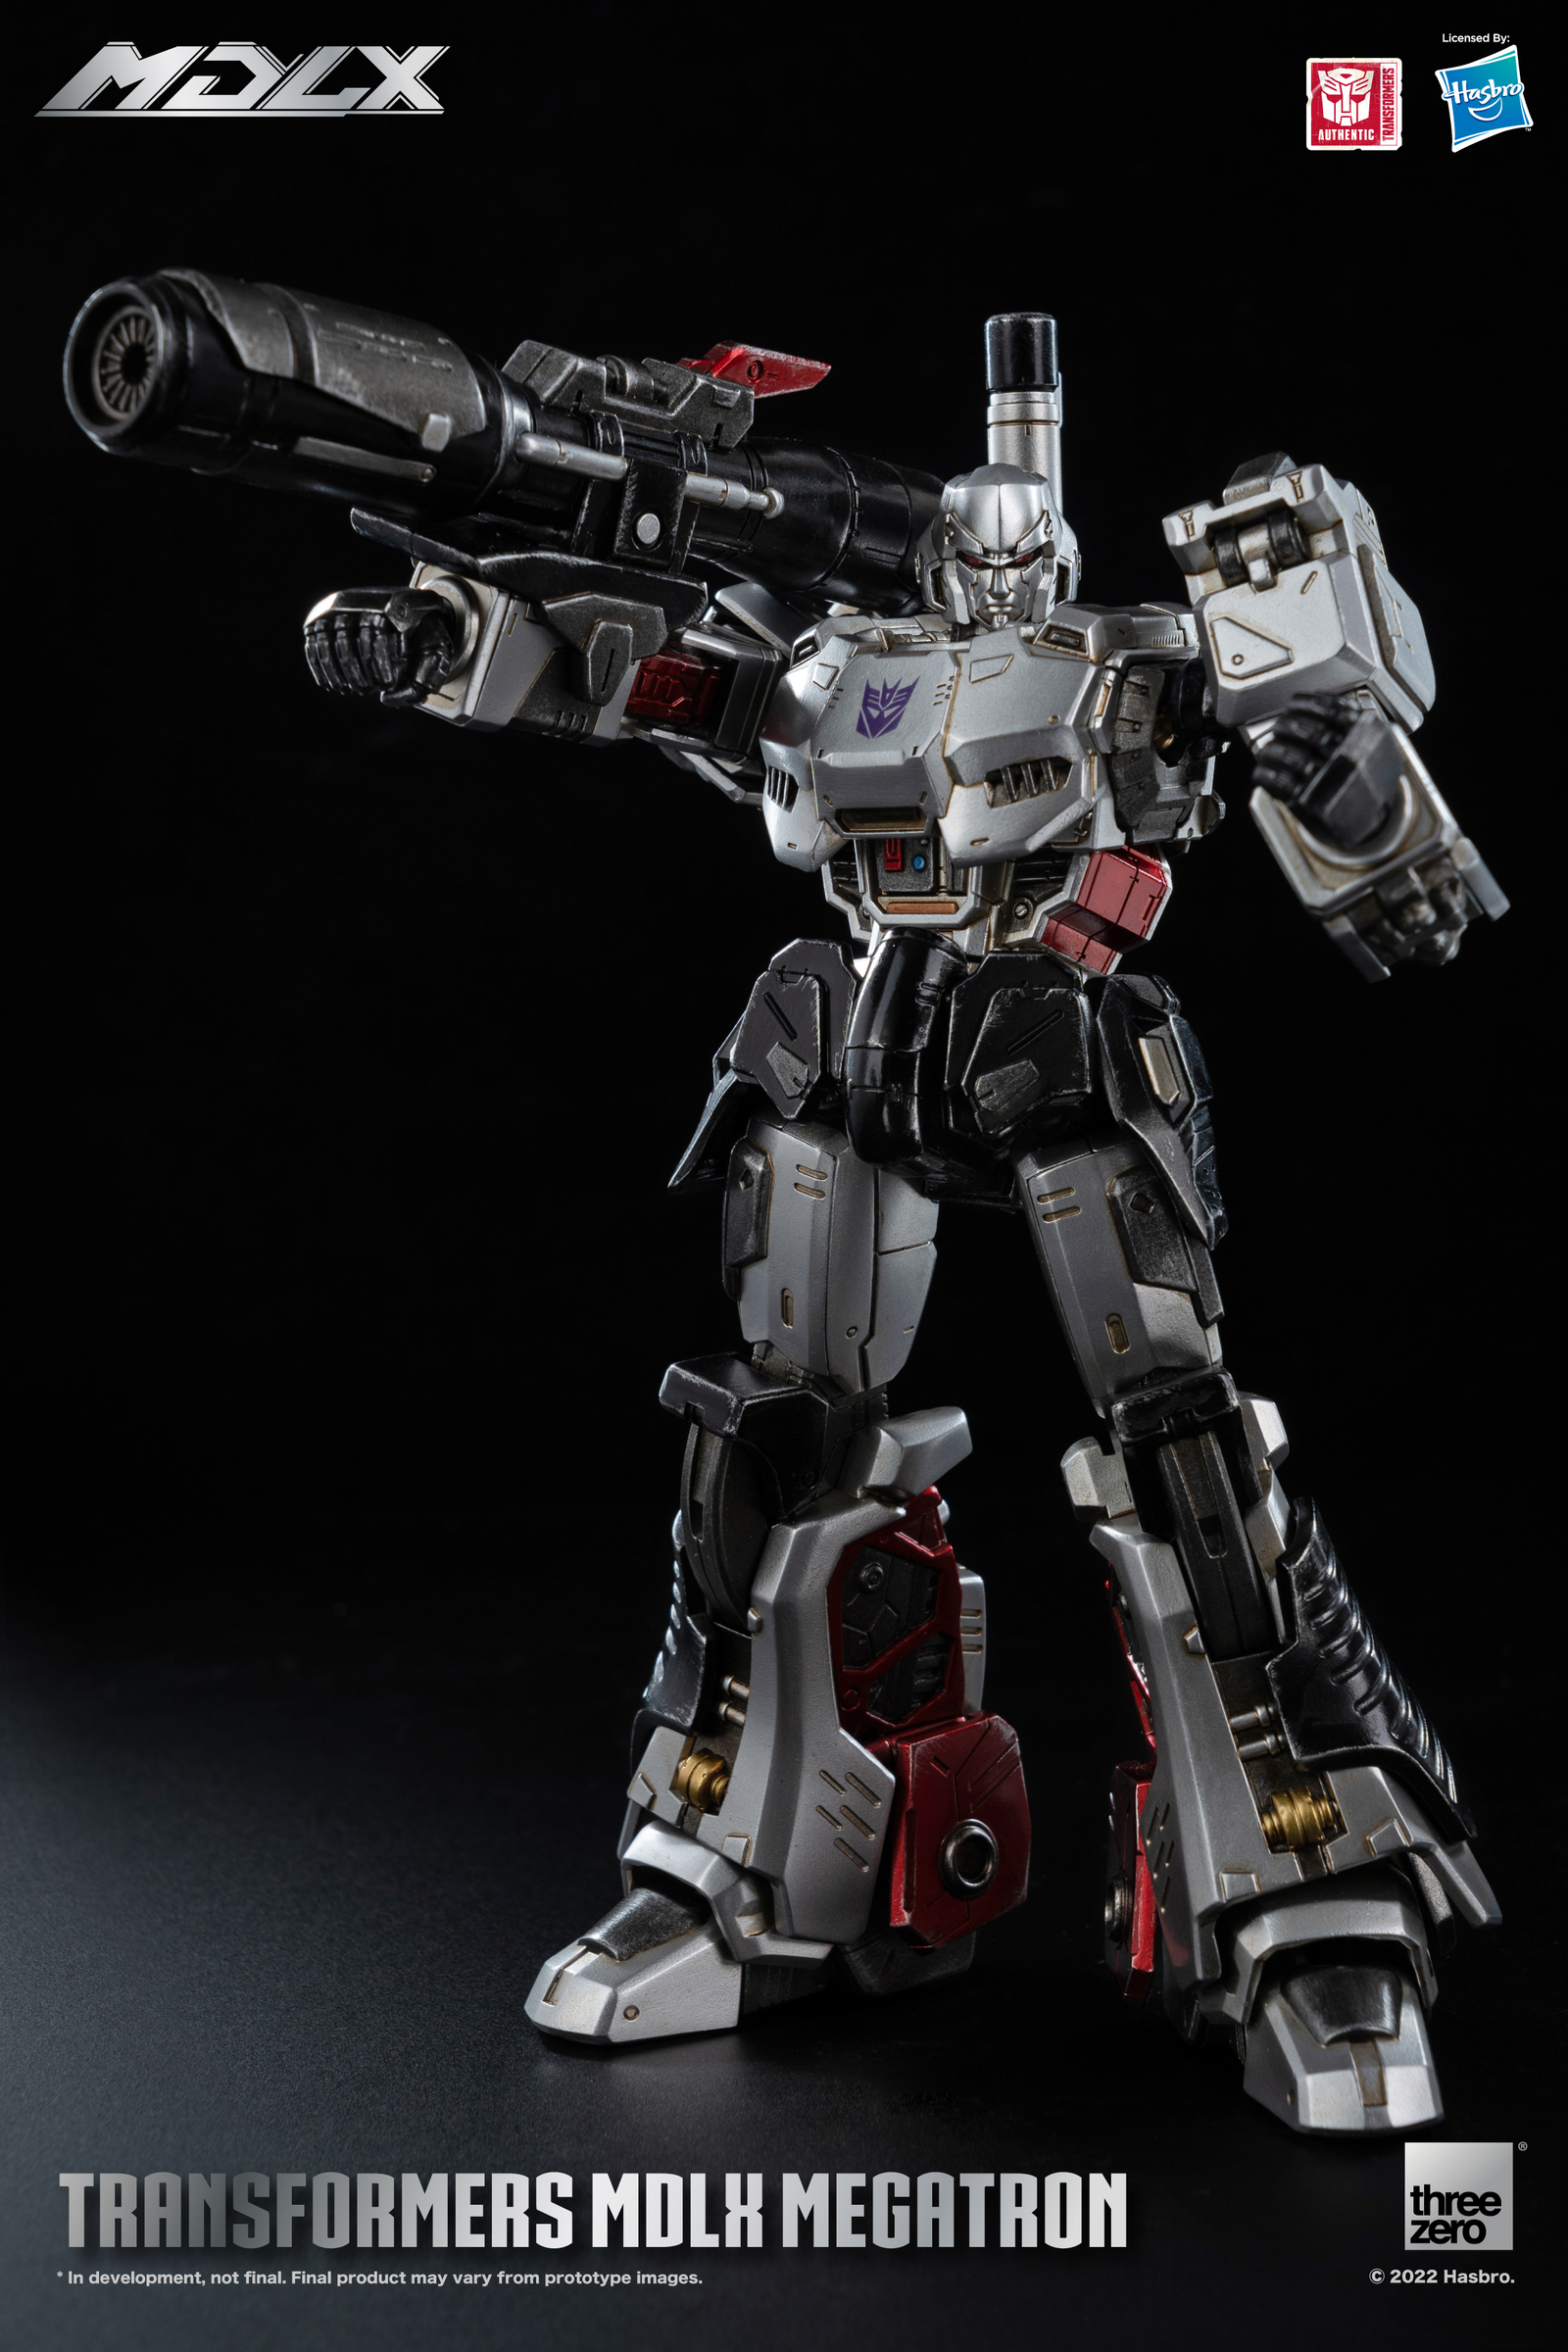  Transformers MDLX Megatron (5)